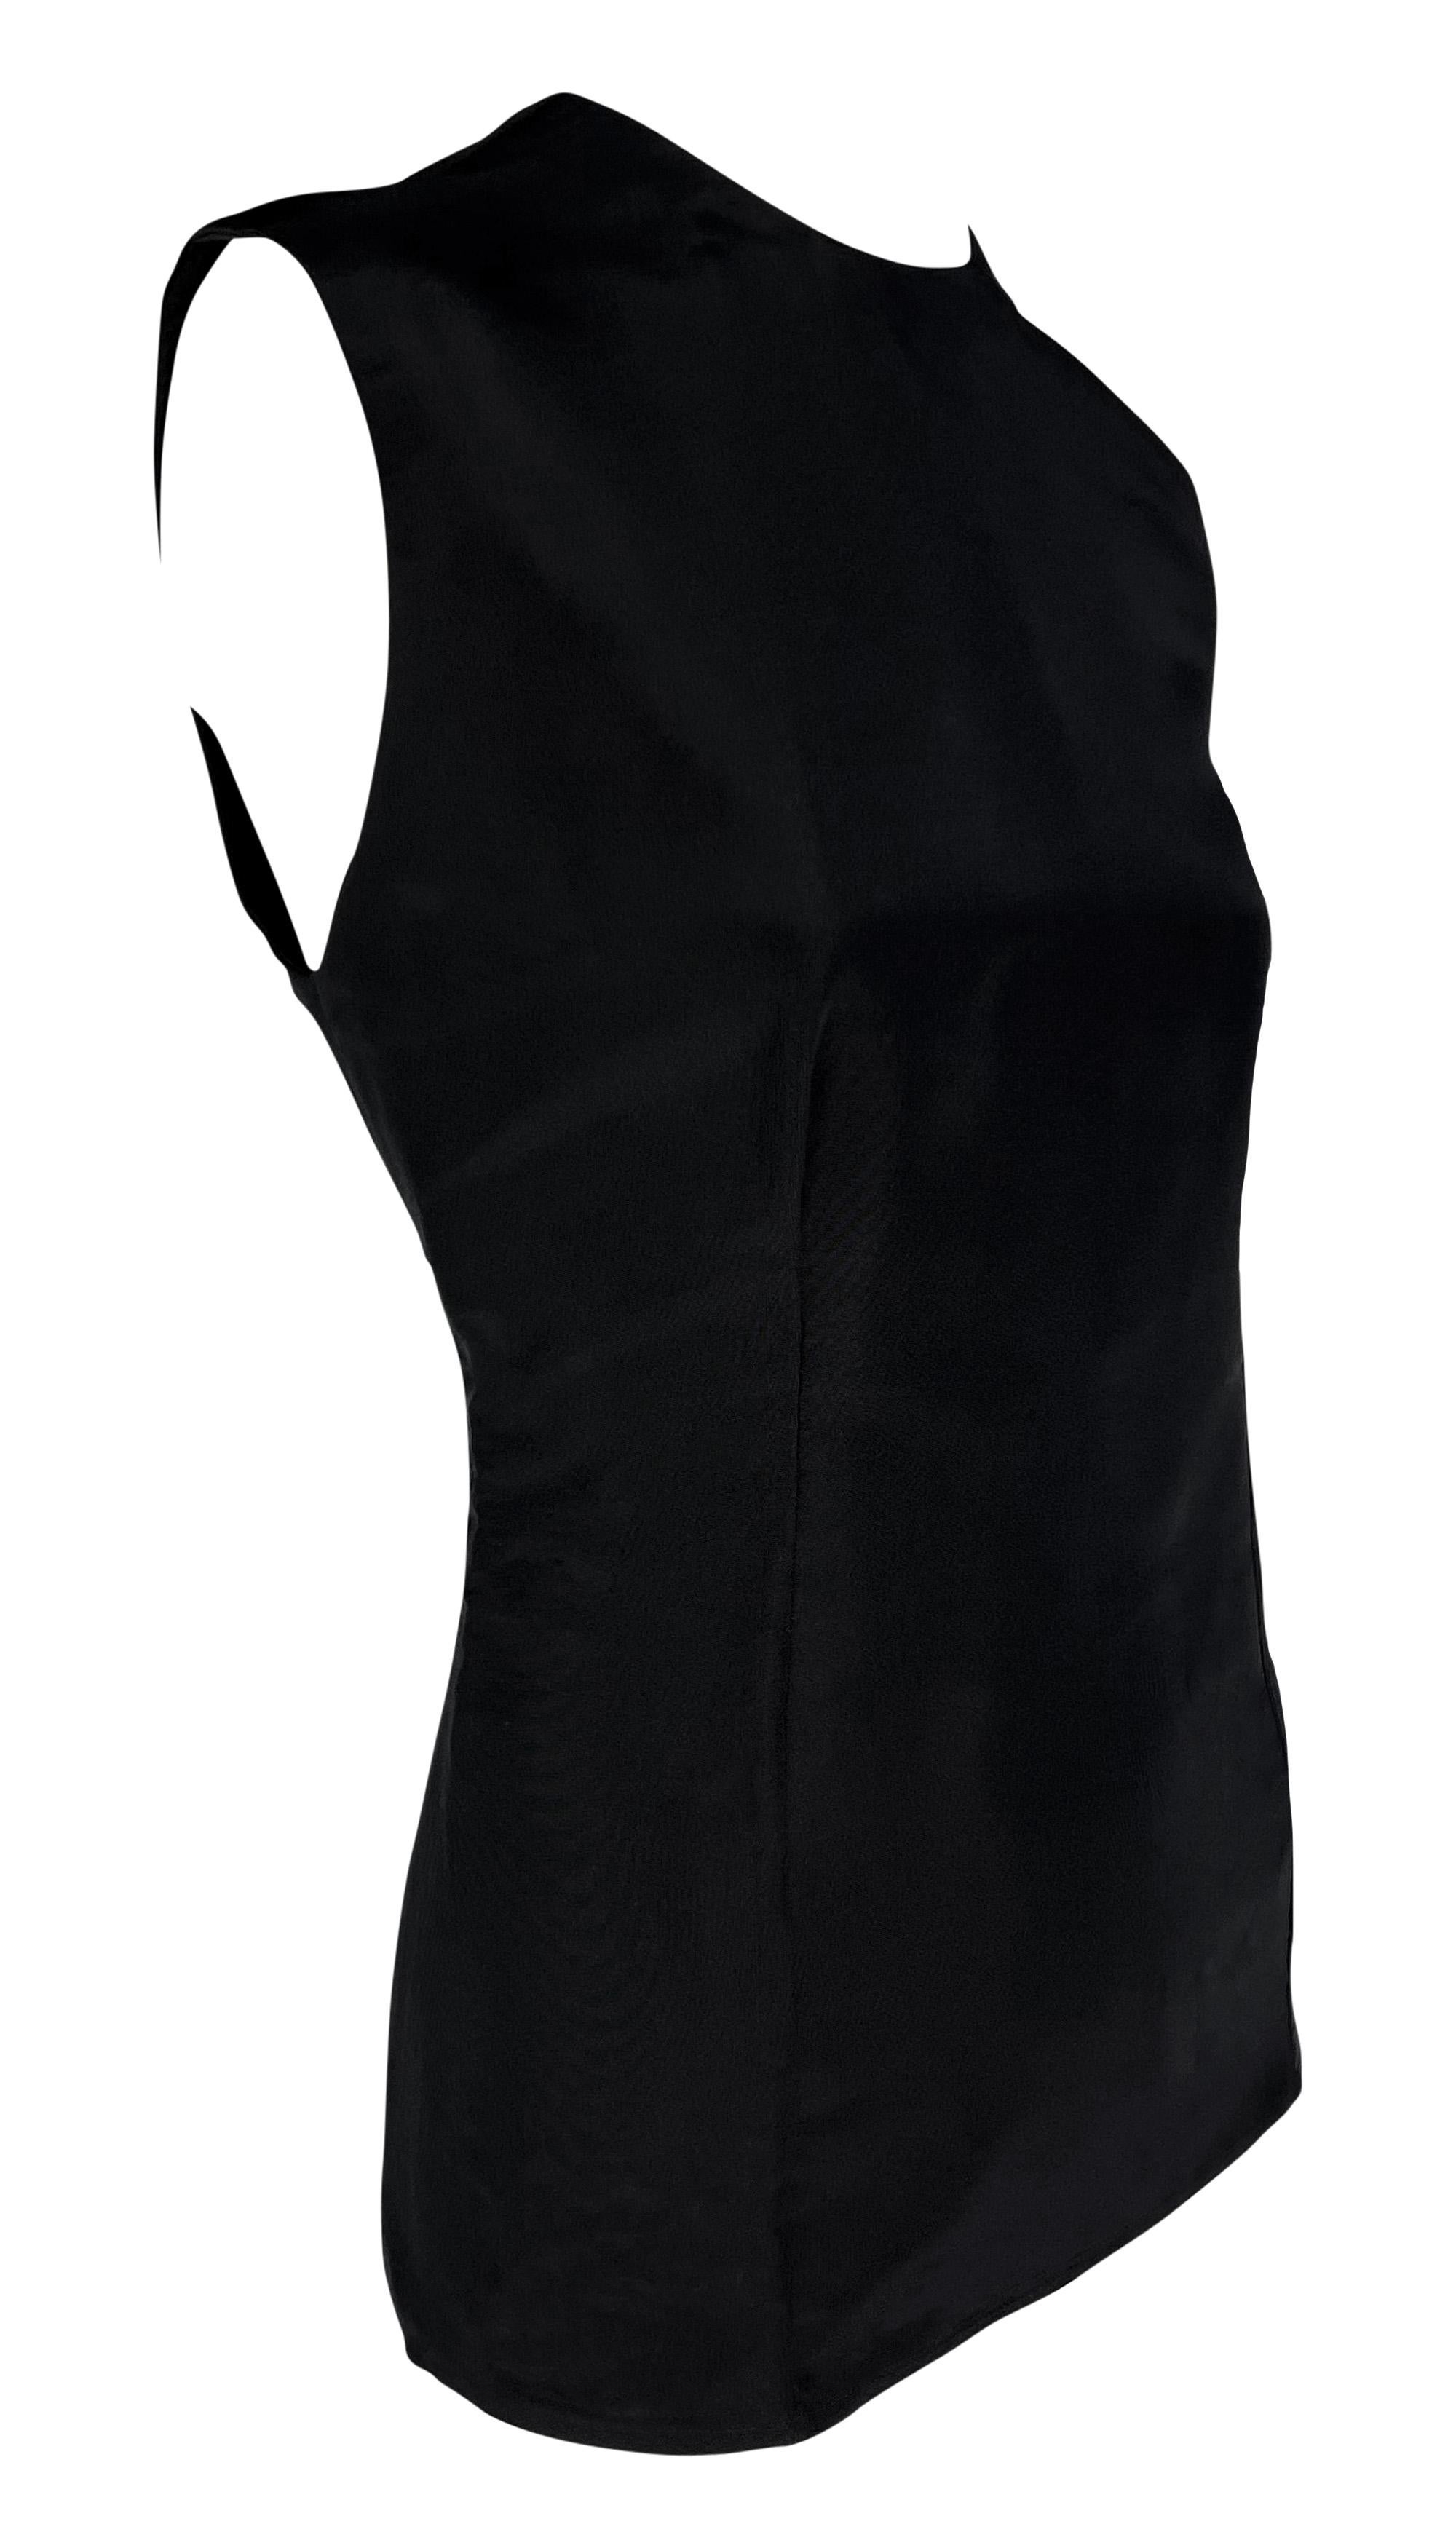 S/S 1990 Gianni Versace Black Silk Taffeta Tailored Fit Sleeveless Top For Sale 1